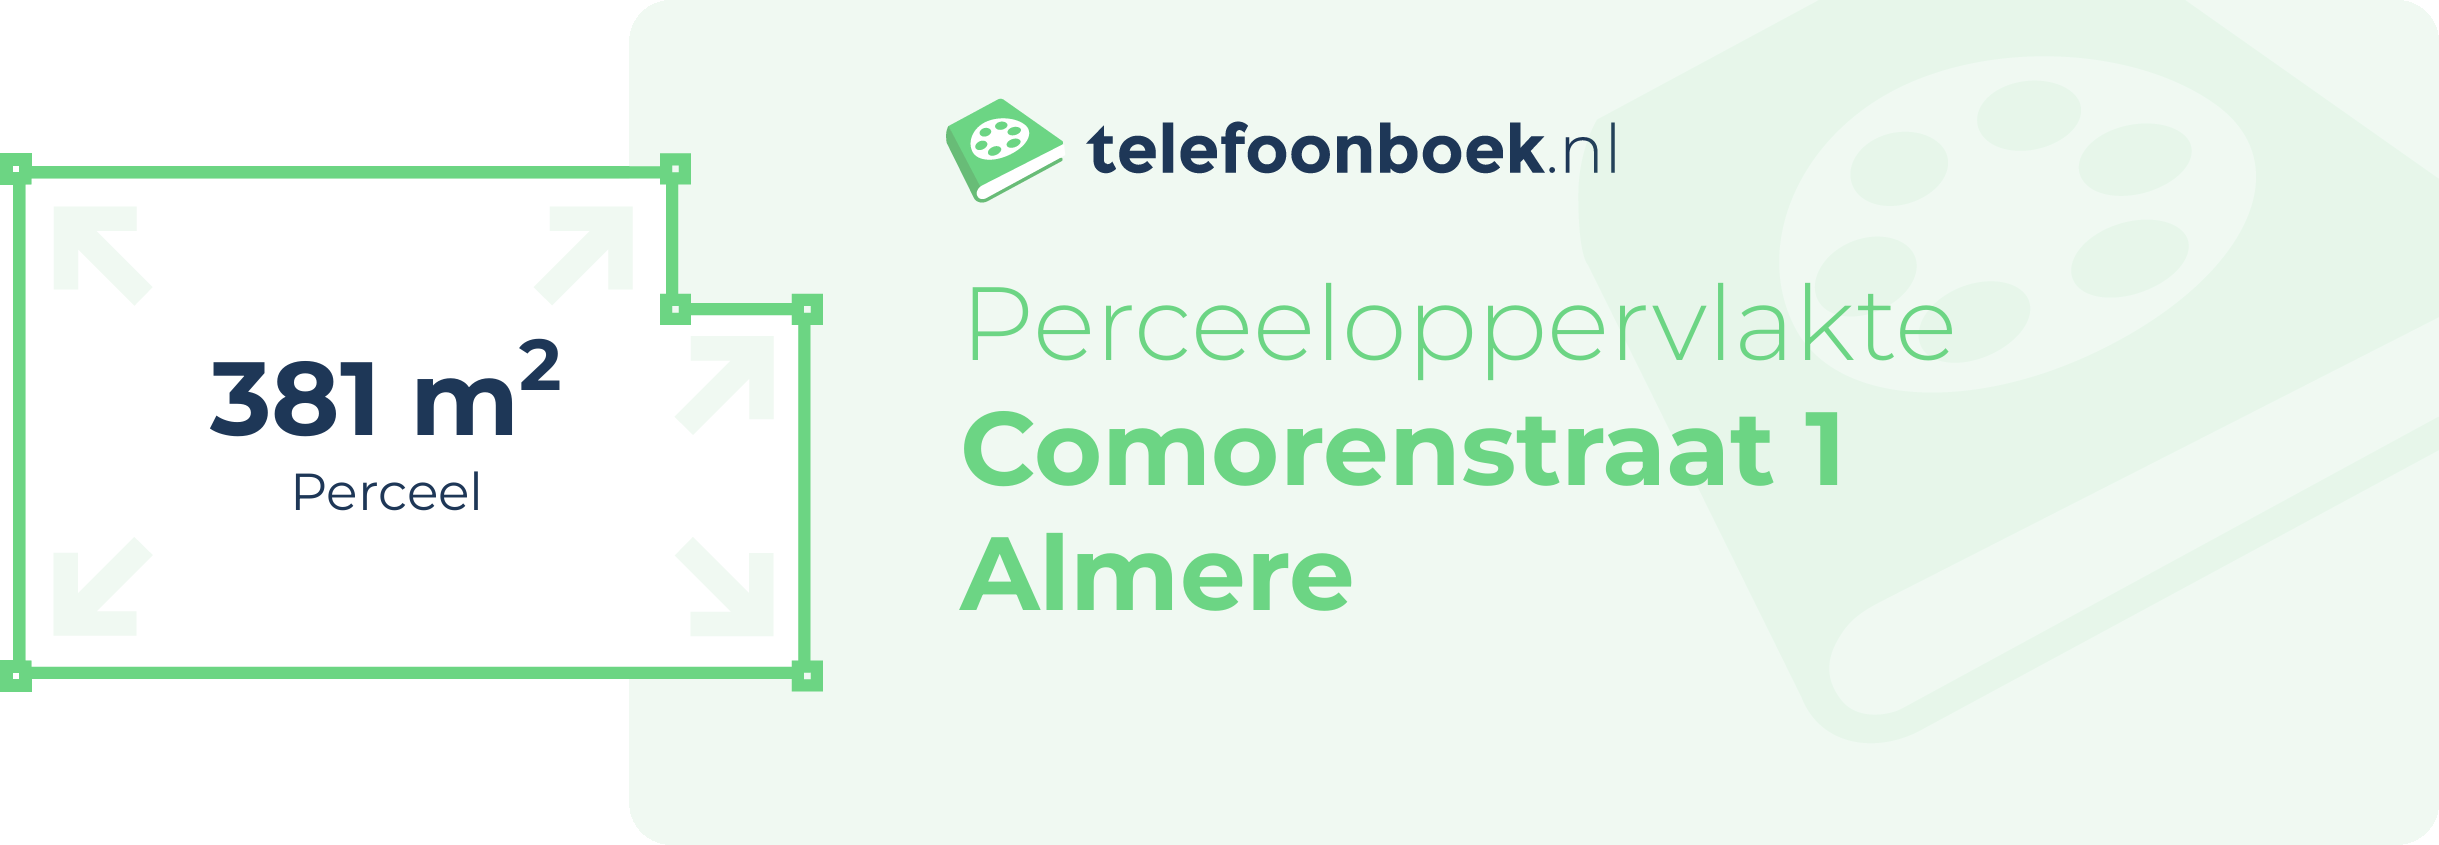 Perceeloppervlakte Comorenstraat 1 Almere